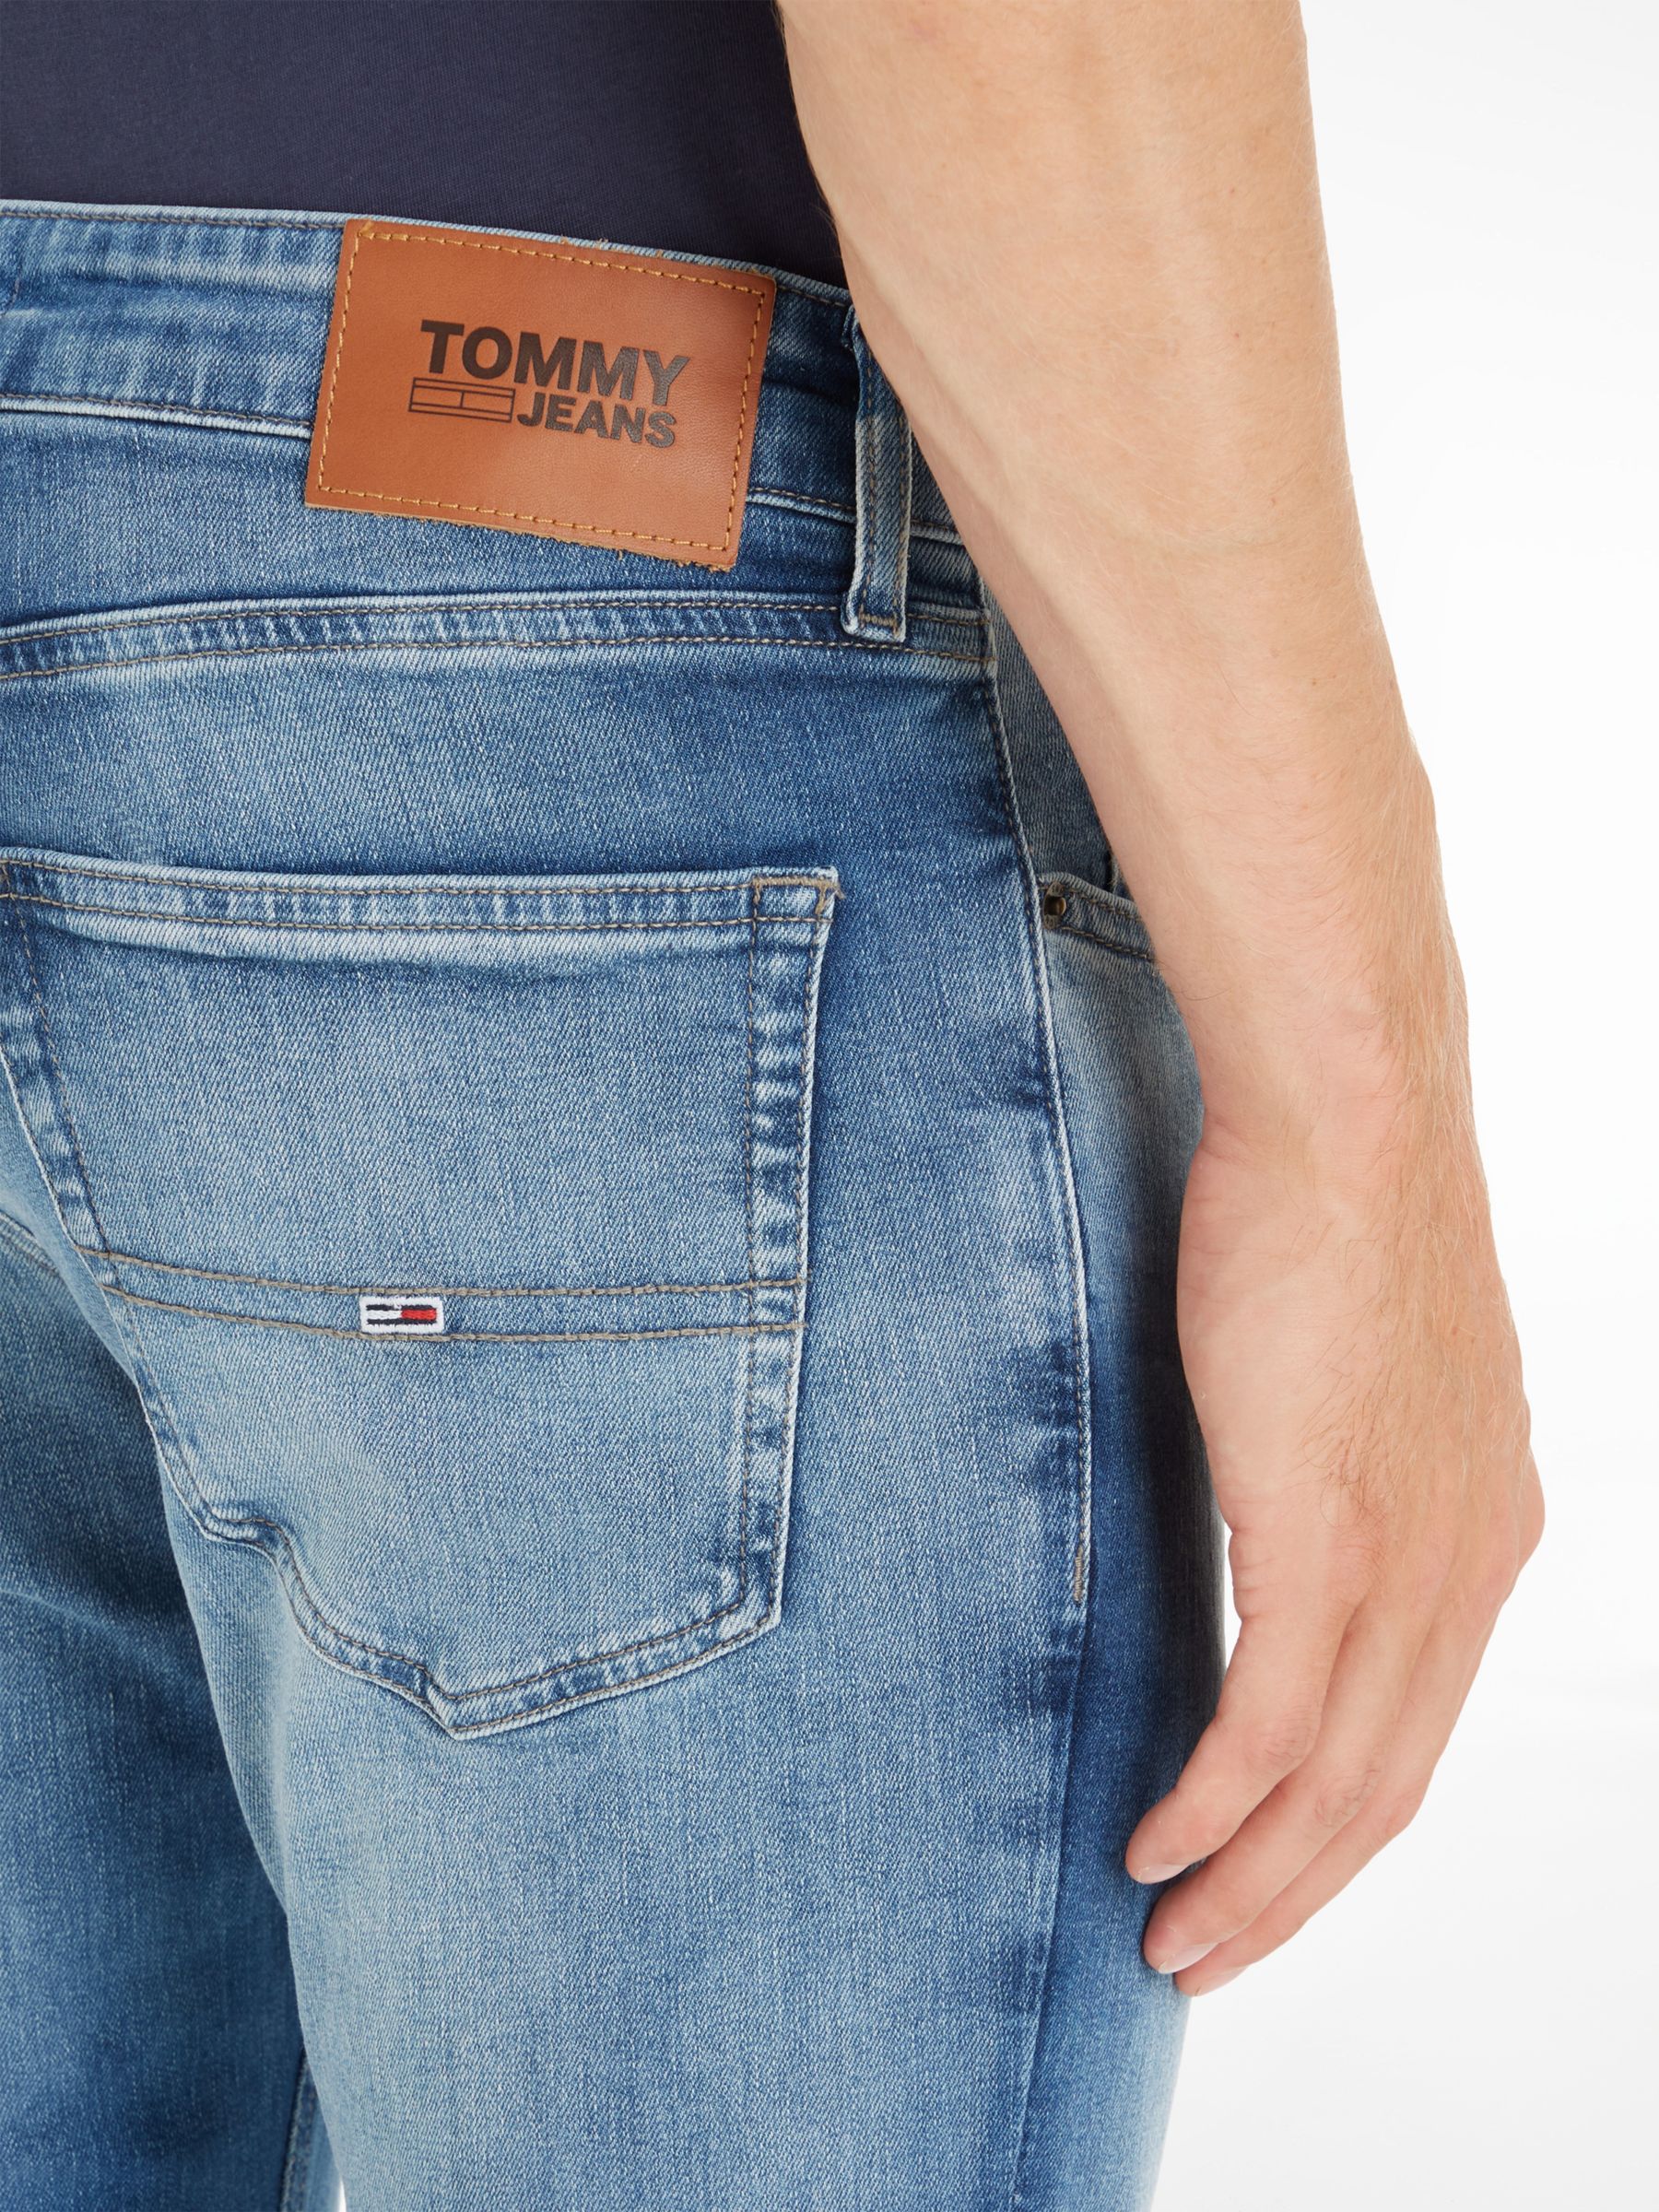 Tommy Jeans Slim Scanton Jeans, Light at John Lewis Partners